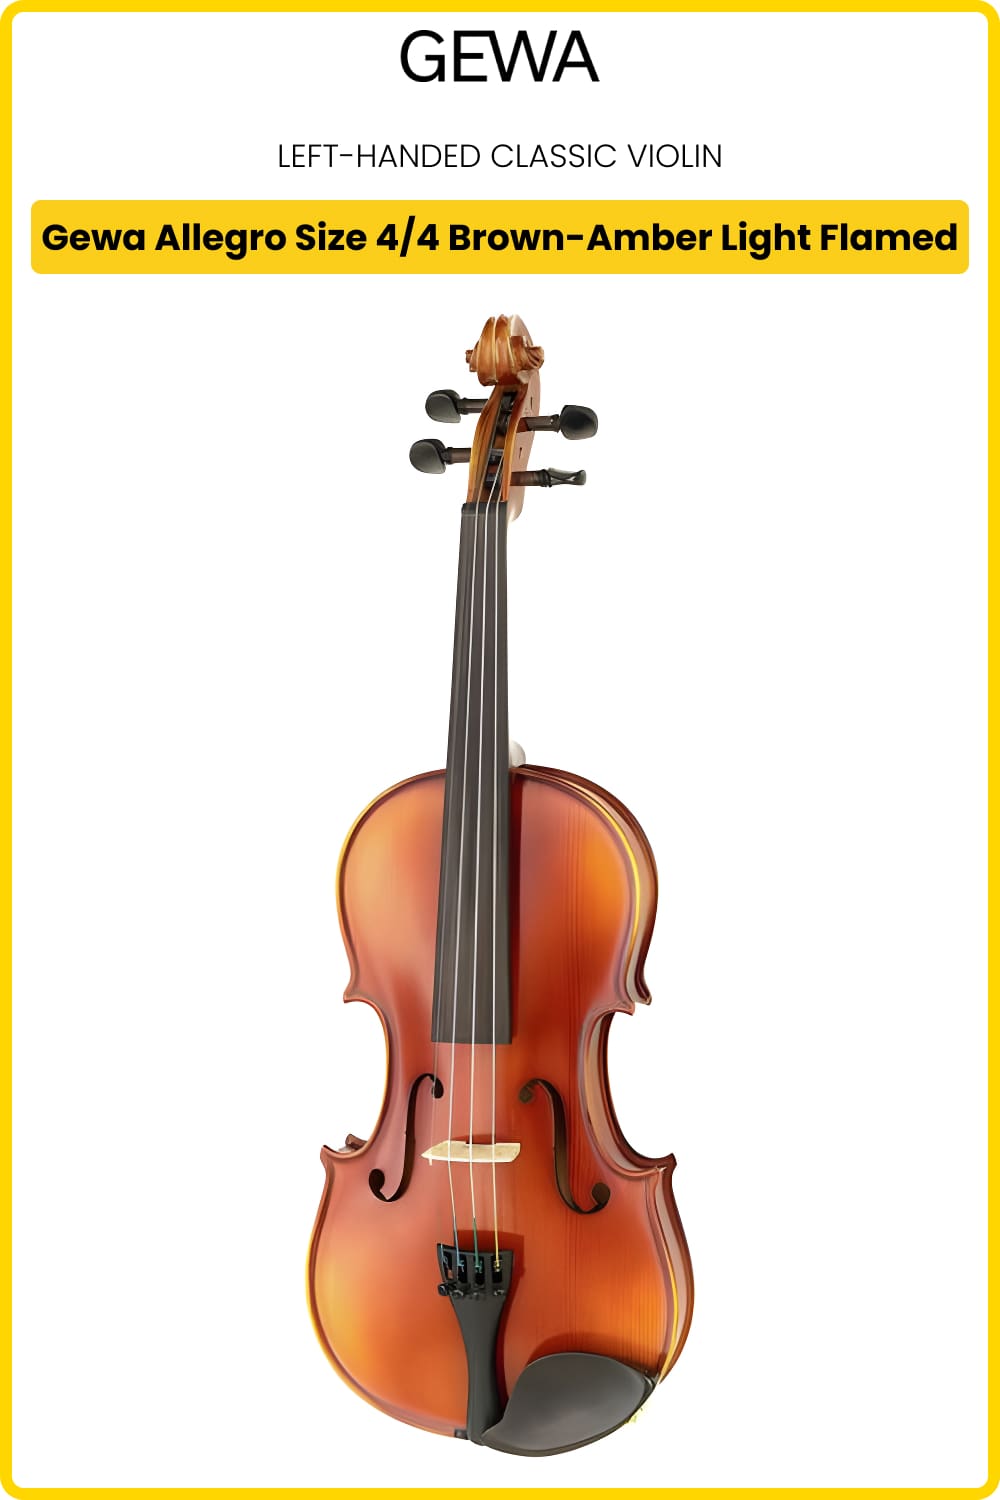 Left-Handed Violin Gewa Allegro Brown-Amber Light Flamed